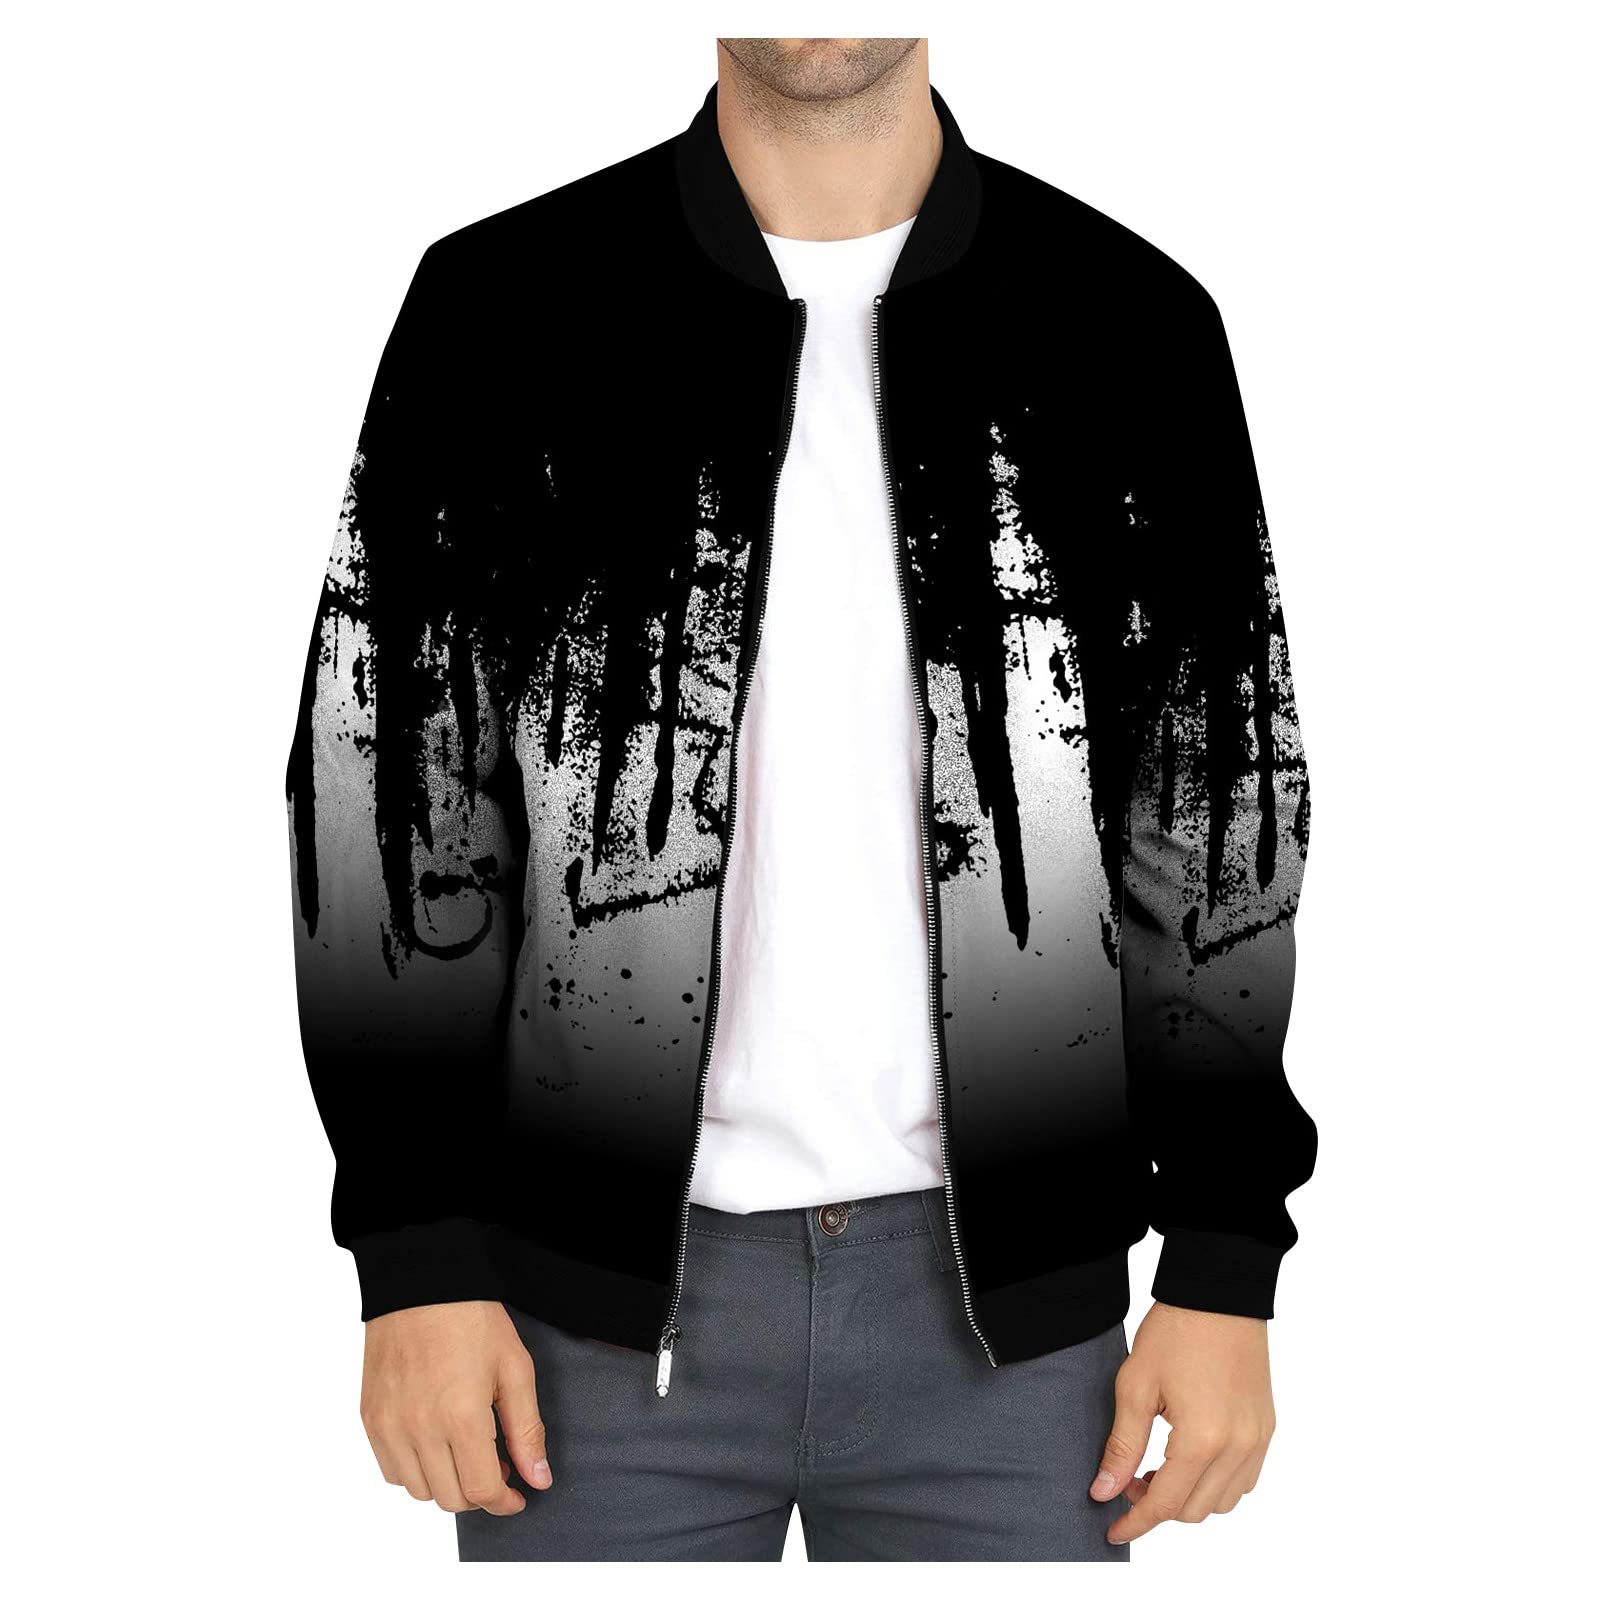 XIAXOGOOL Bomber Jacket Men Fashion Novelty 3D Printed Graphic Jackets For Men Cropped Coat Zipper Varsity Baseball Jacket